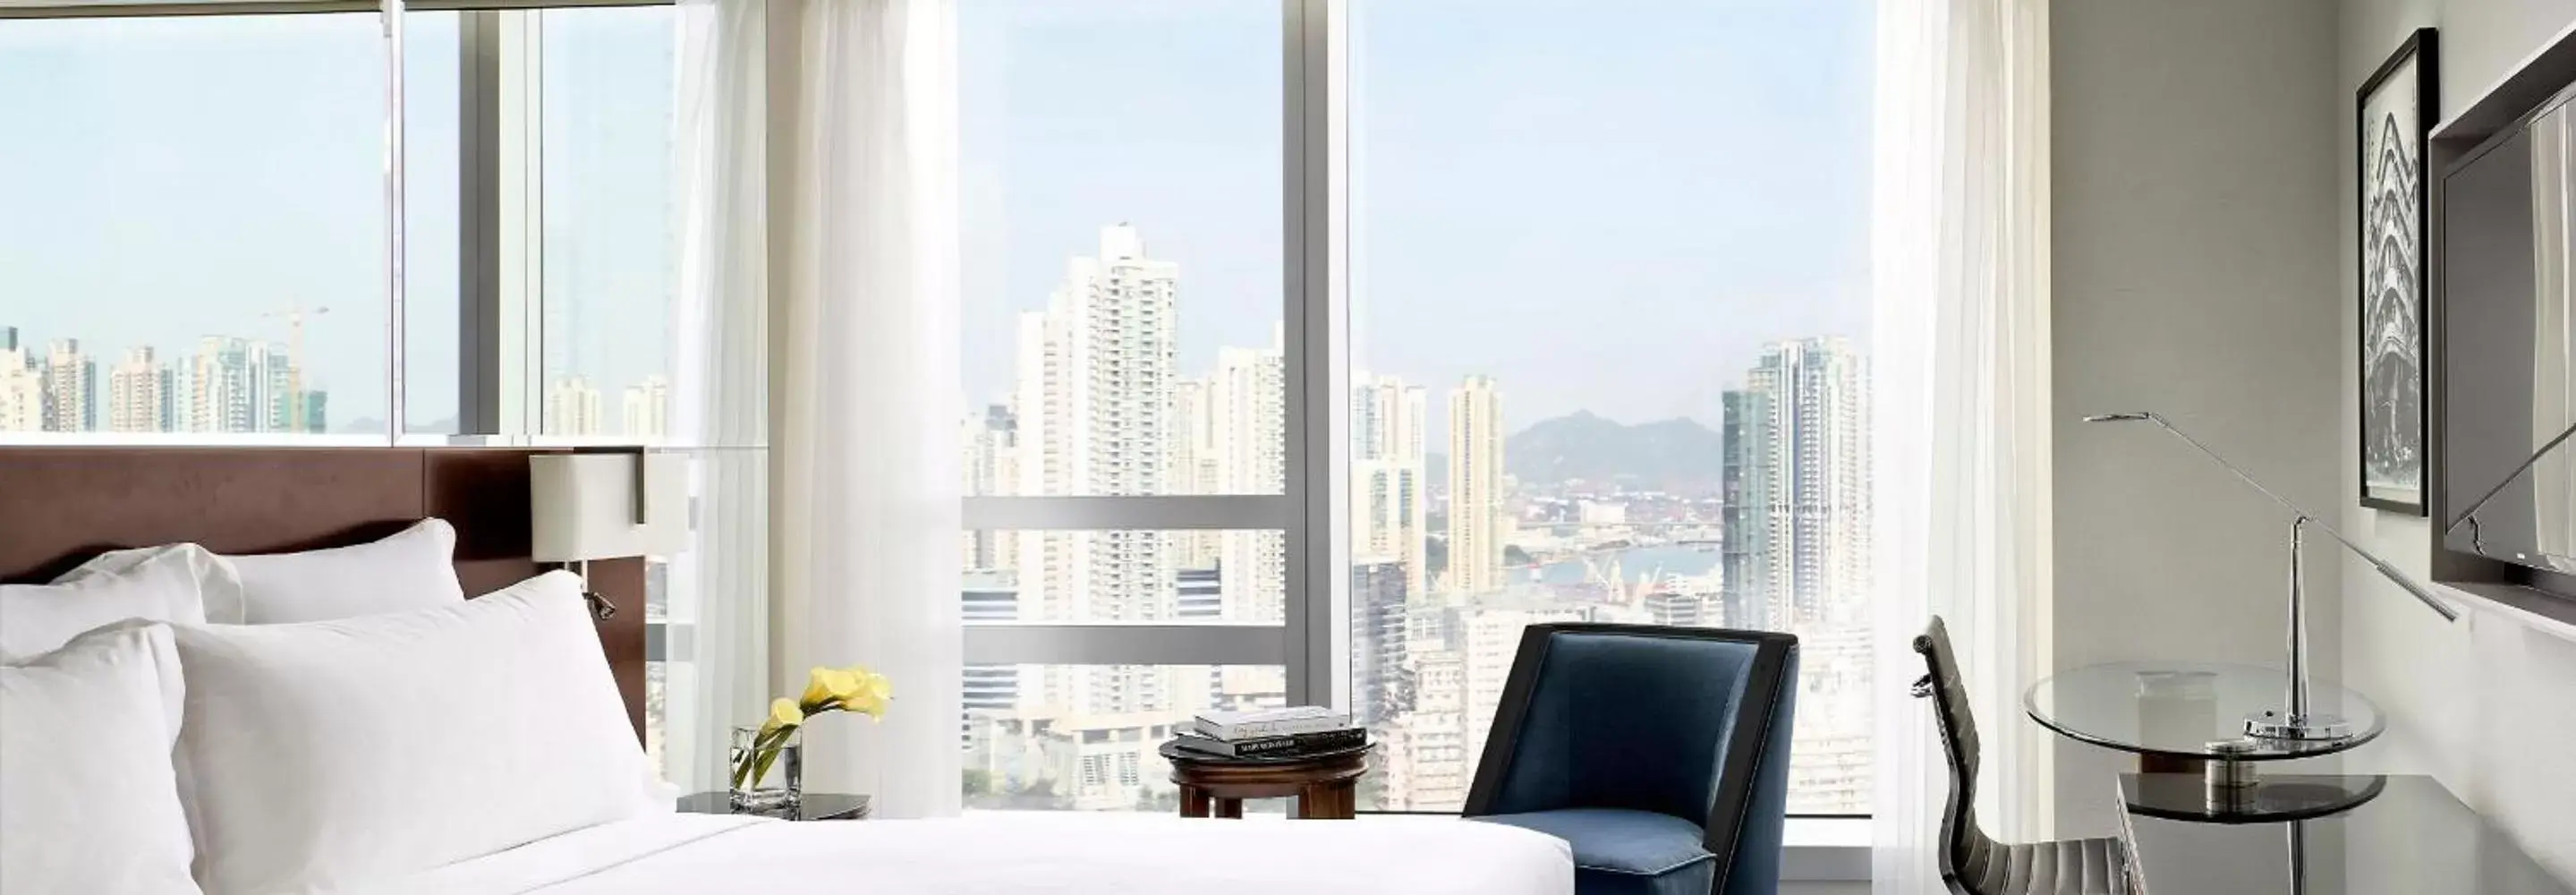 City view in Cordis, Hong Kong